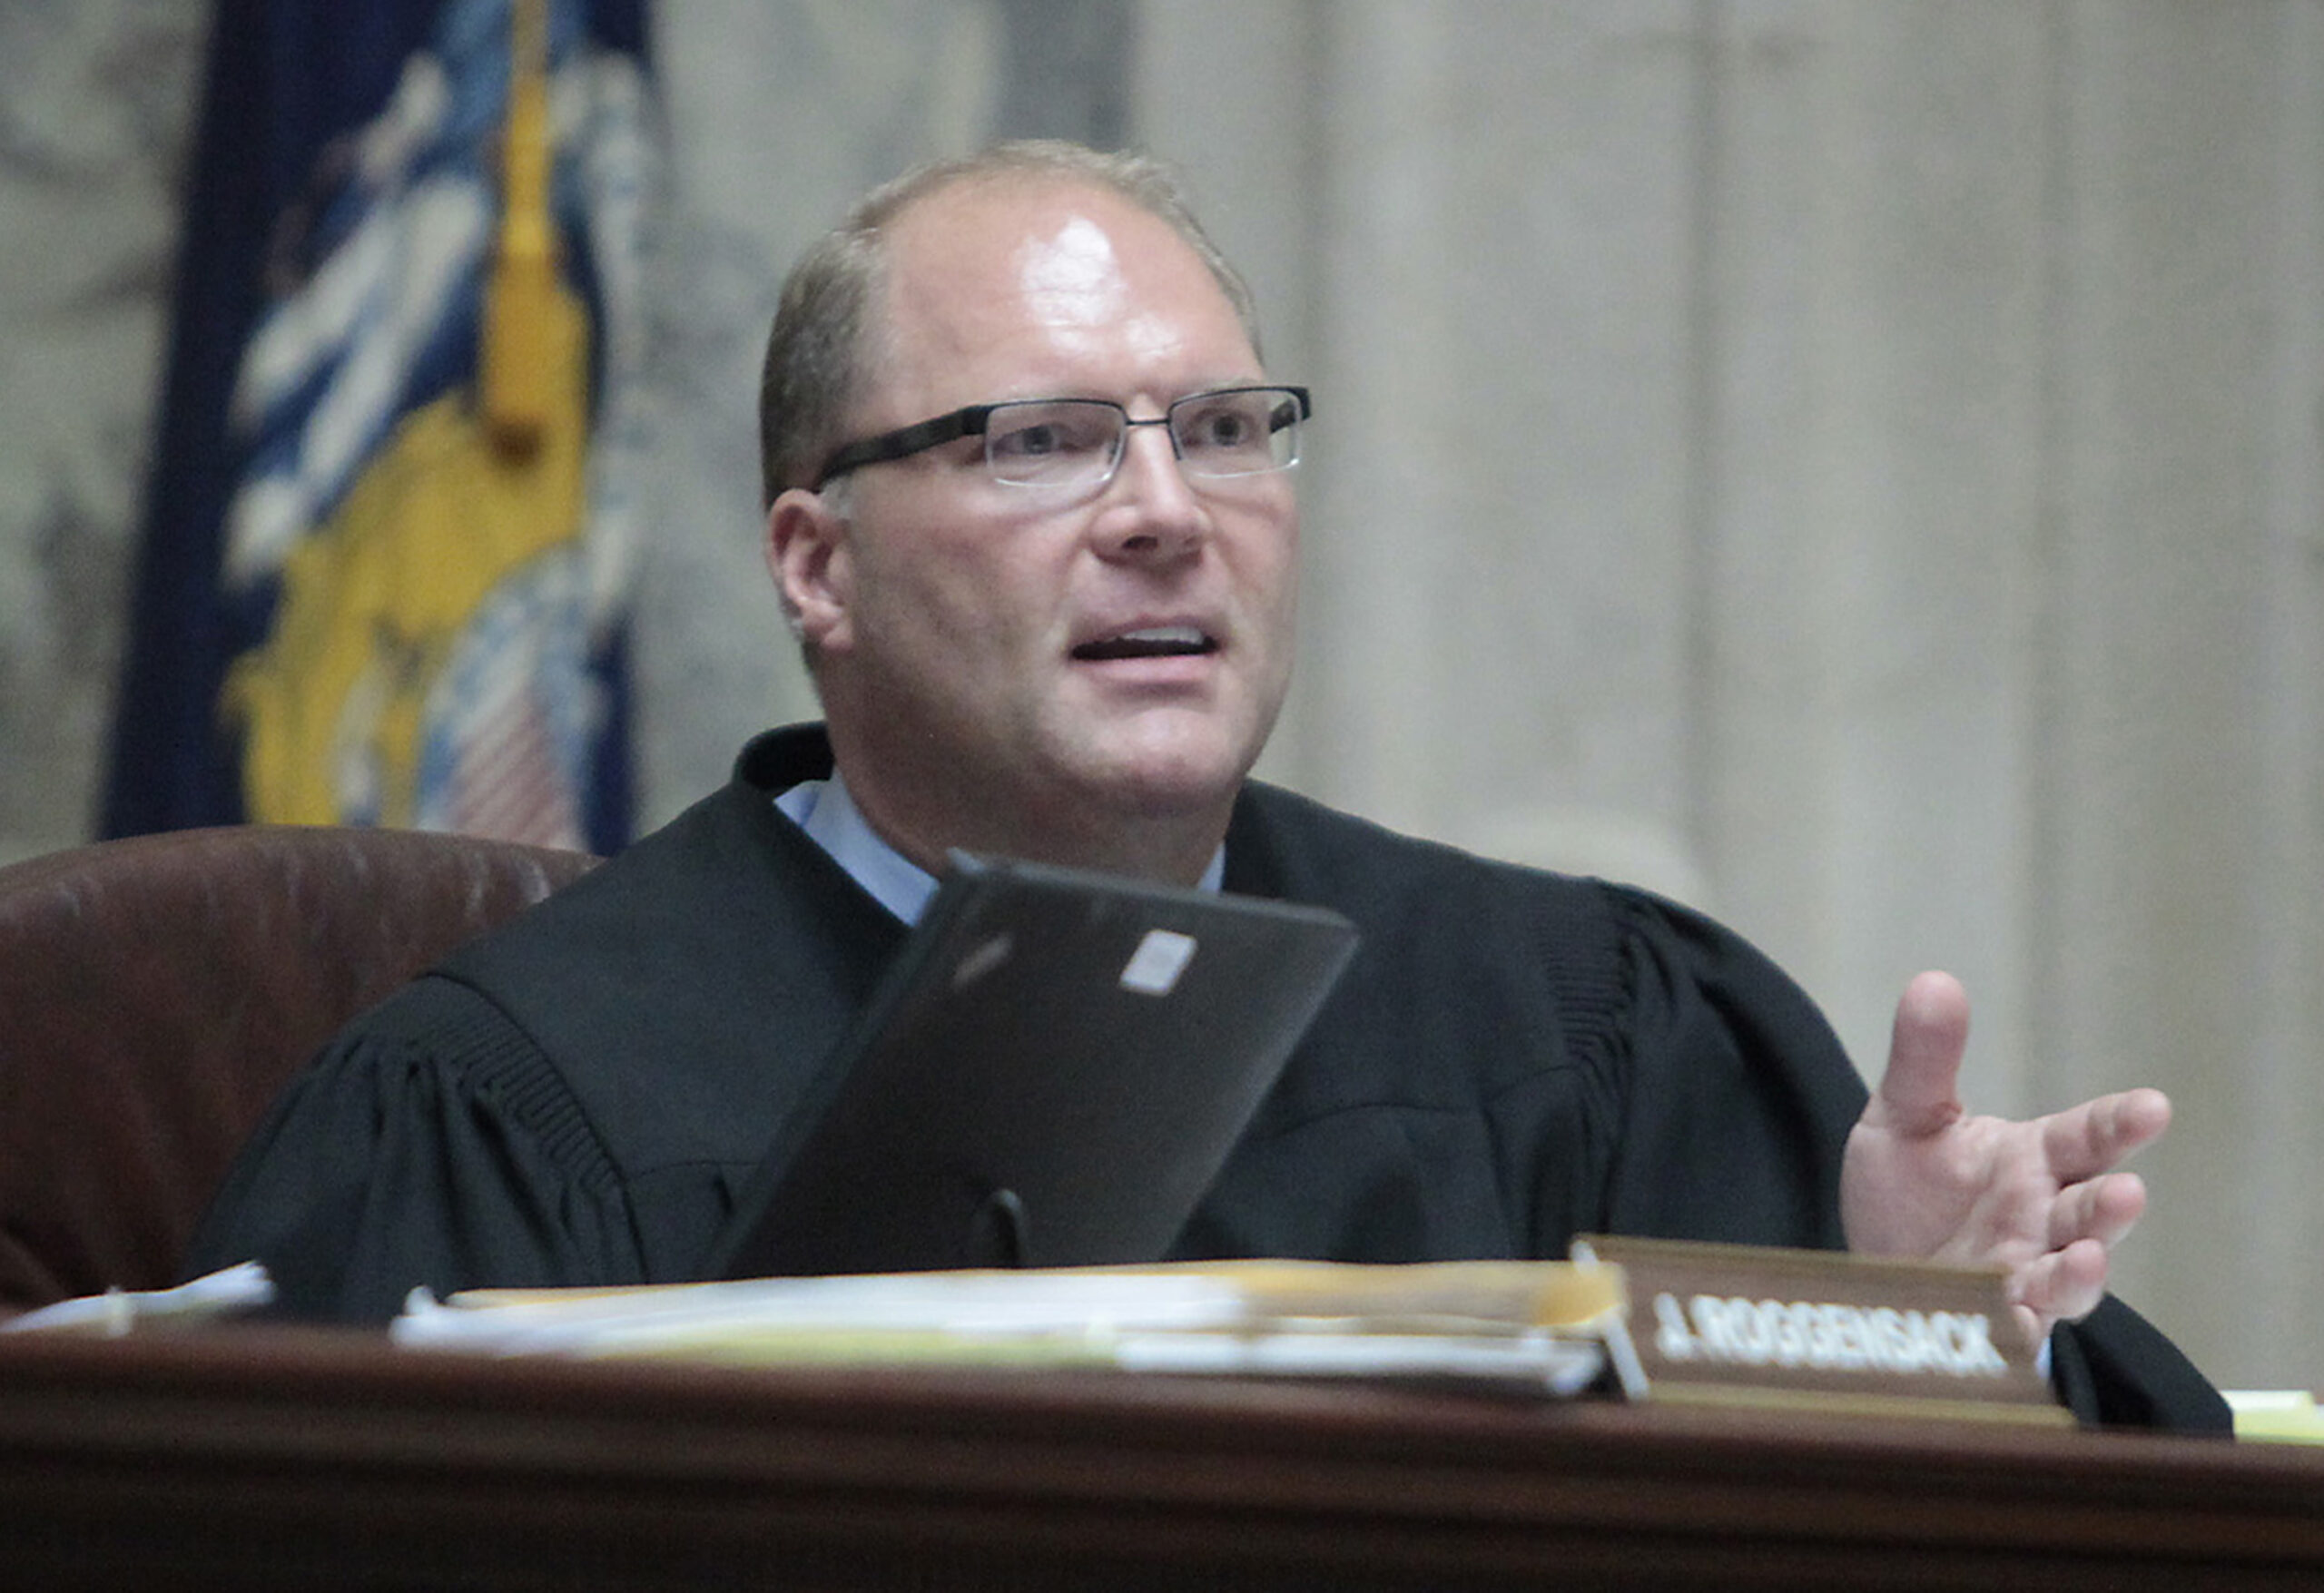 Wisconsin Supreme Court Justice Michael Gableman